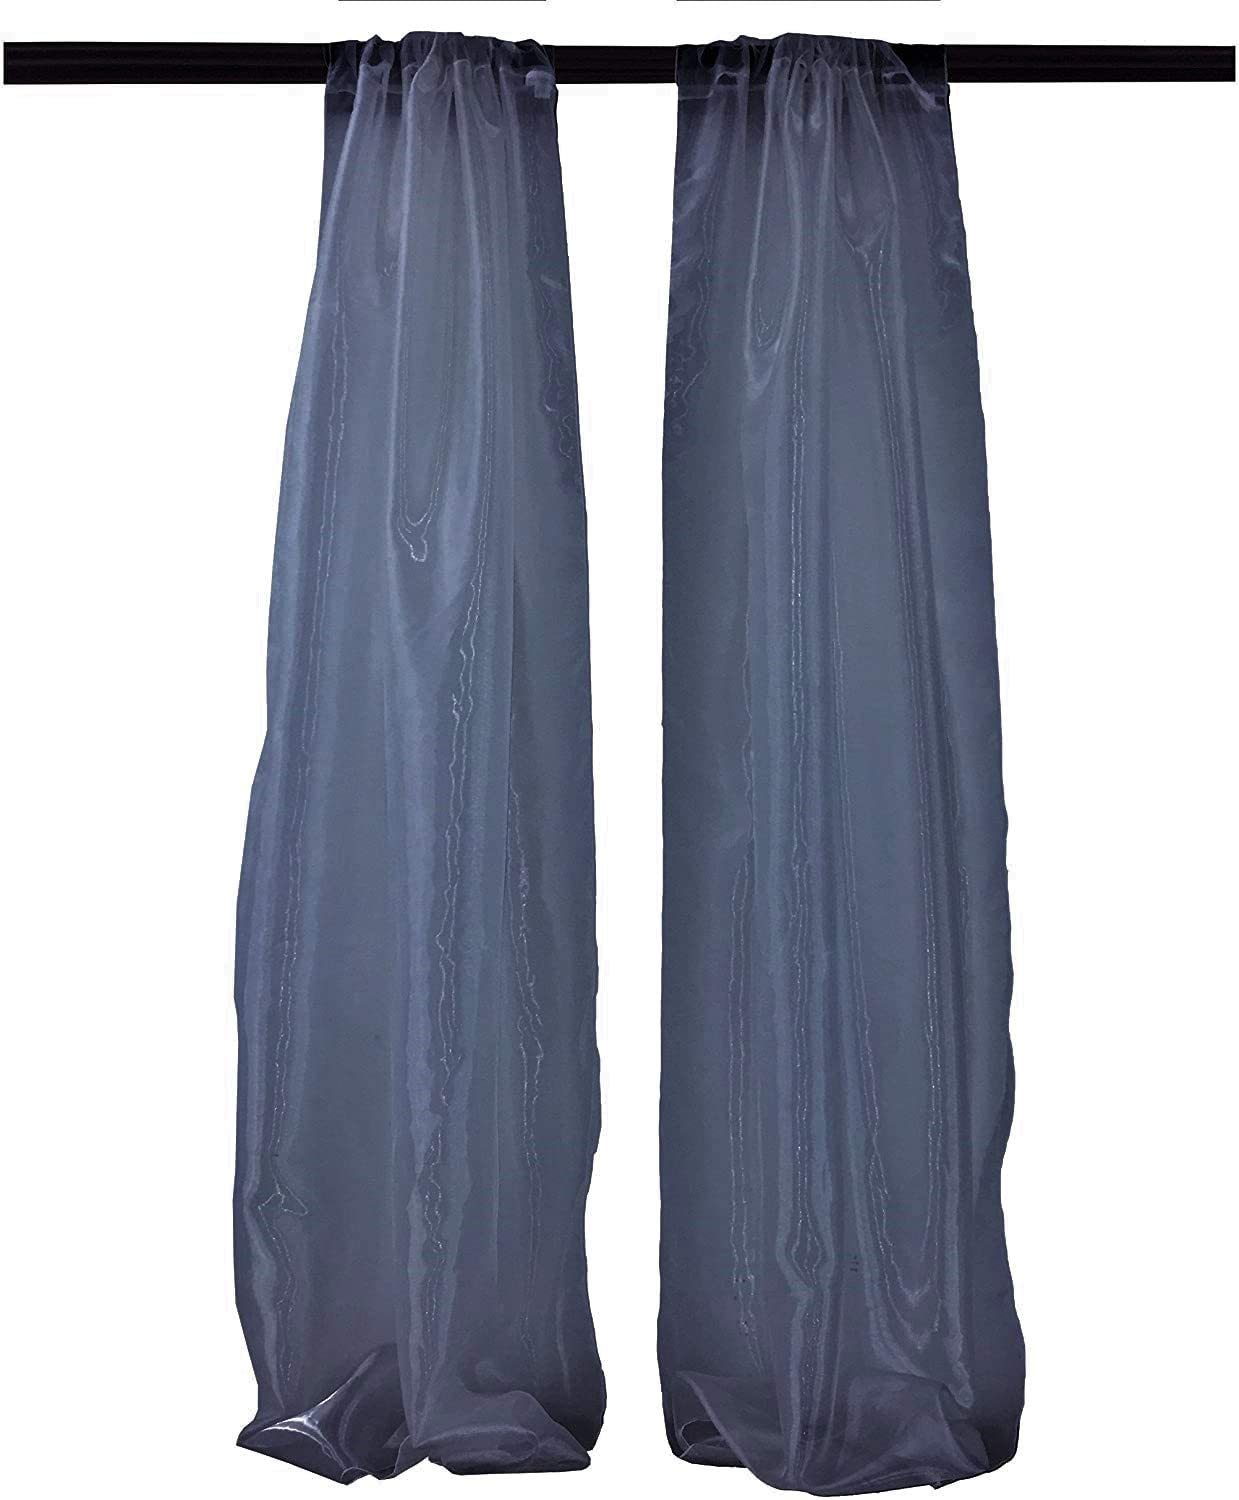 100% Polyester Sheer Mirror Organza Backdrop Drape, Curtain Panels, Room Divider, 1 Pair (Navy Blue,